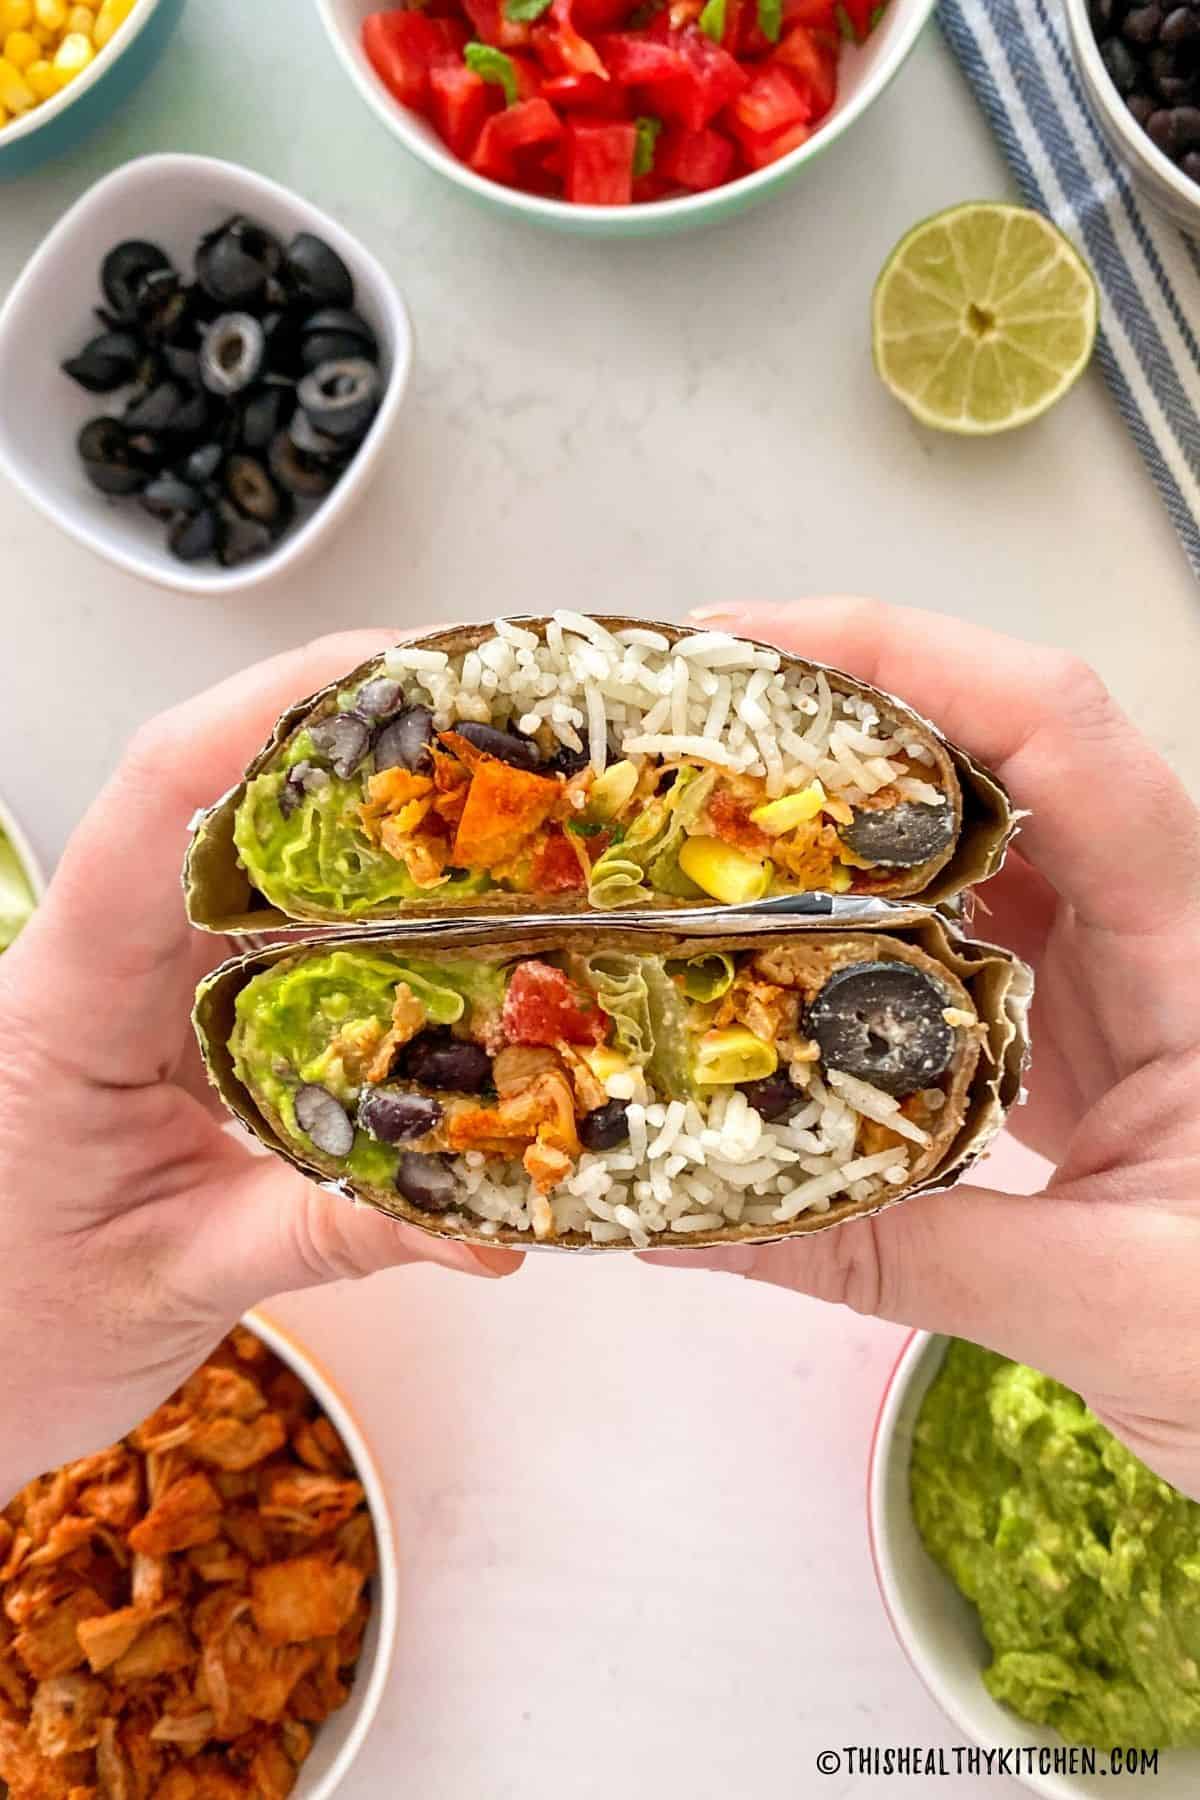 Hands holding up jackfruit burrito that is cut in half.